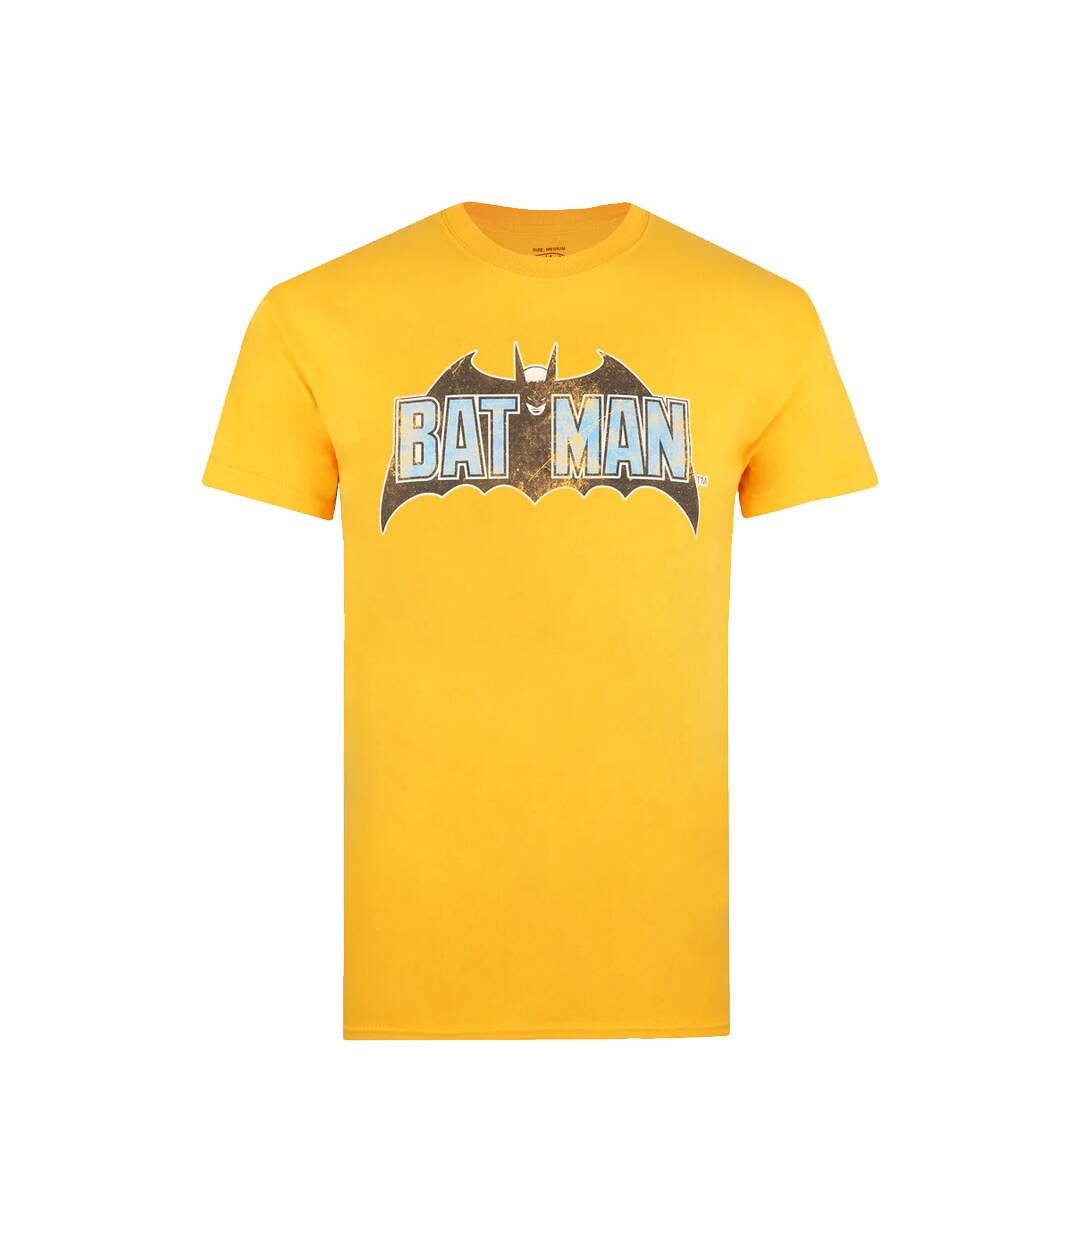 Batman - T-shirt - Homme (Jaune doré) - UTTV577